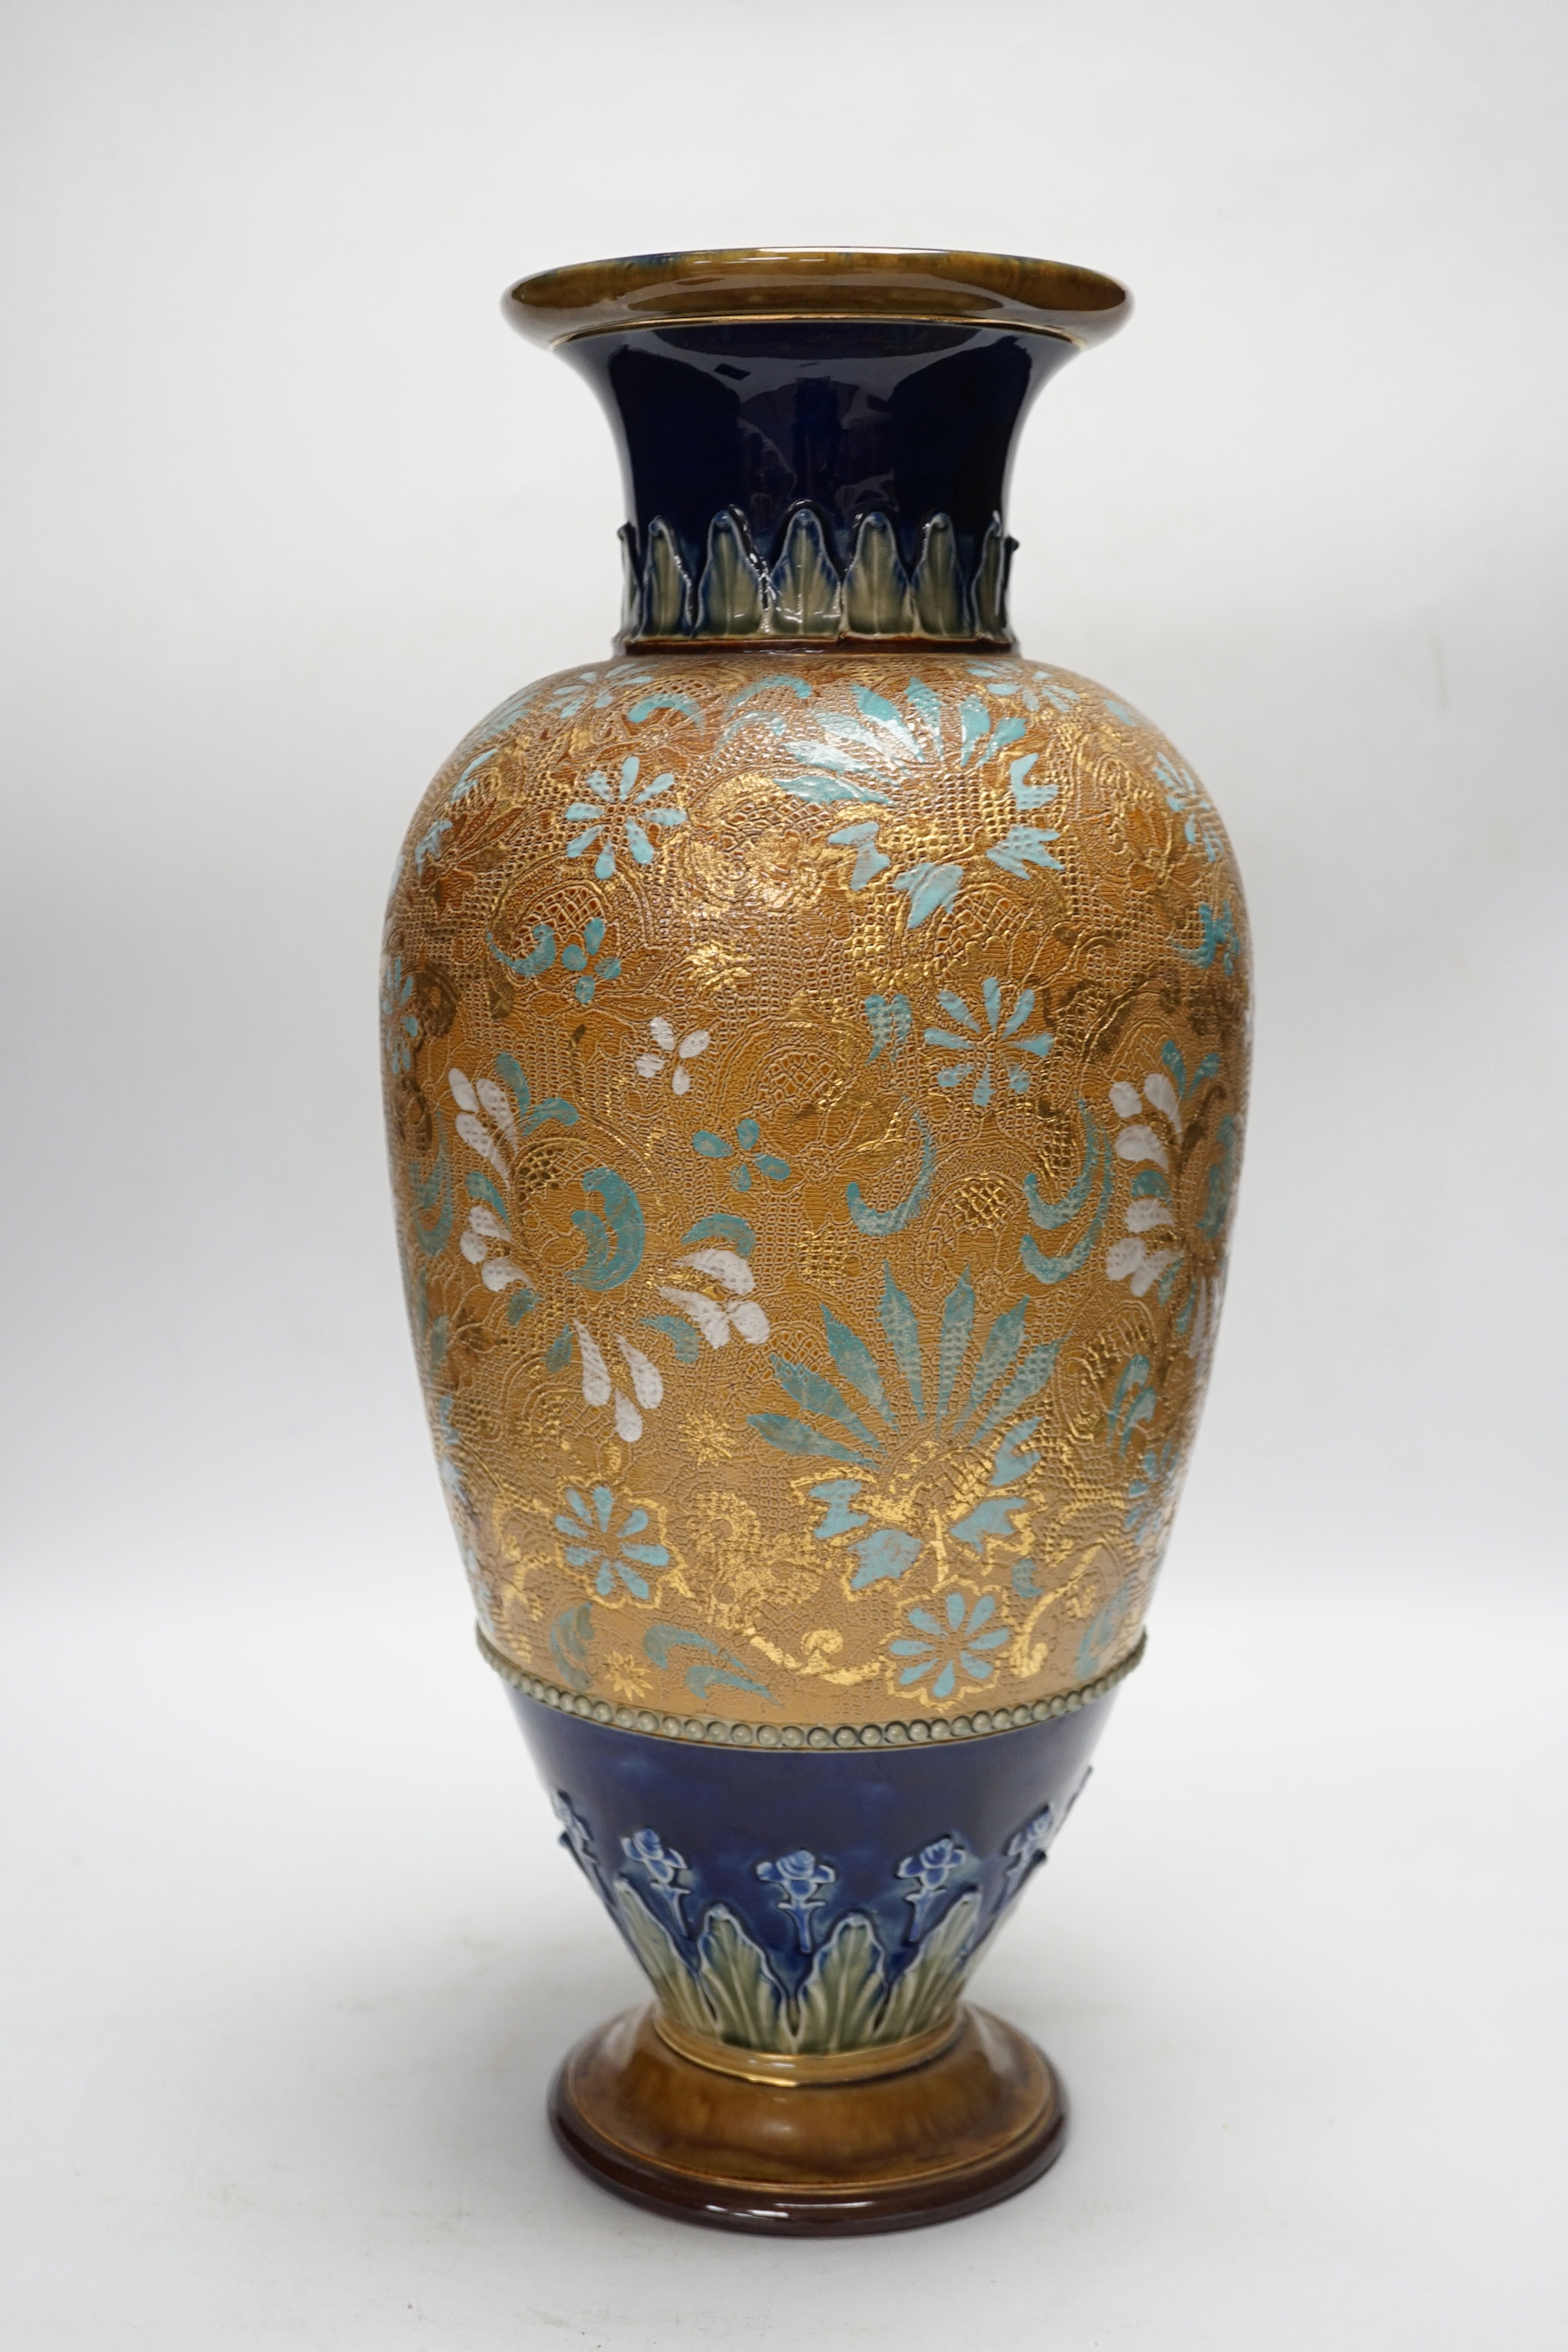 A large Royal Doulton & Slater’s patent stoneware vase, 43cm